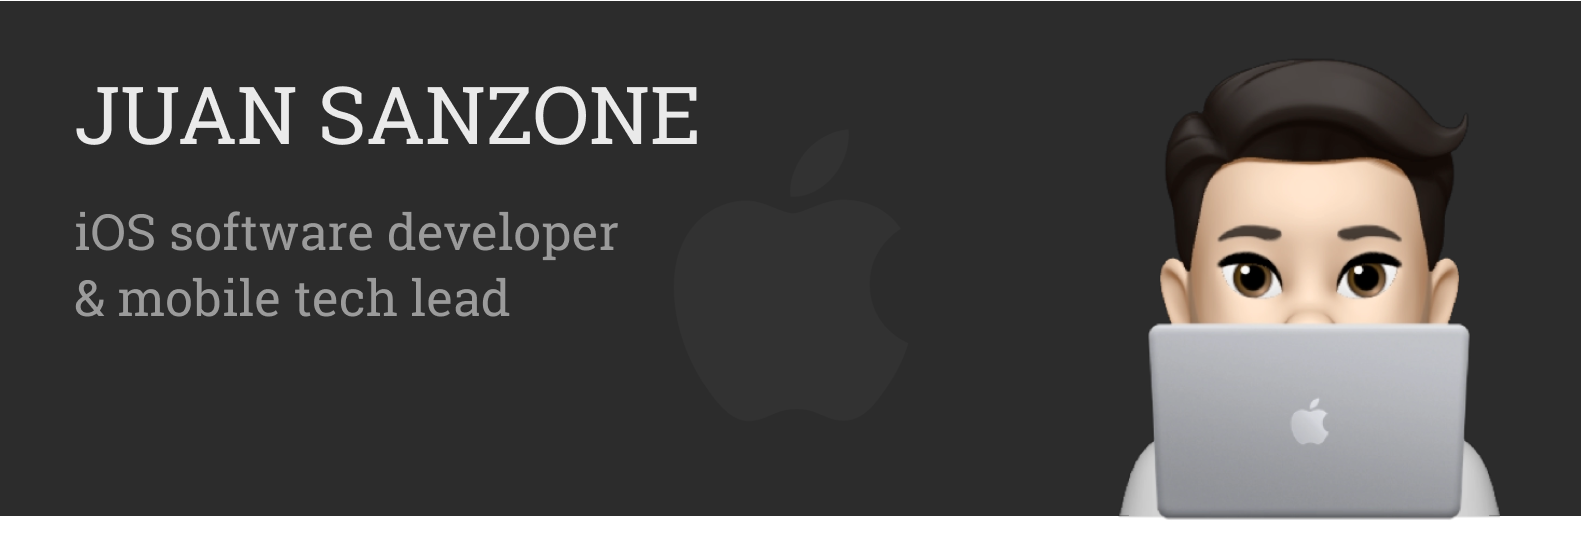 banner that says Juan Sanzone - iOS developer, tech lead